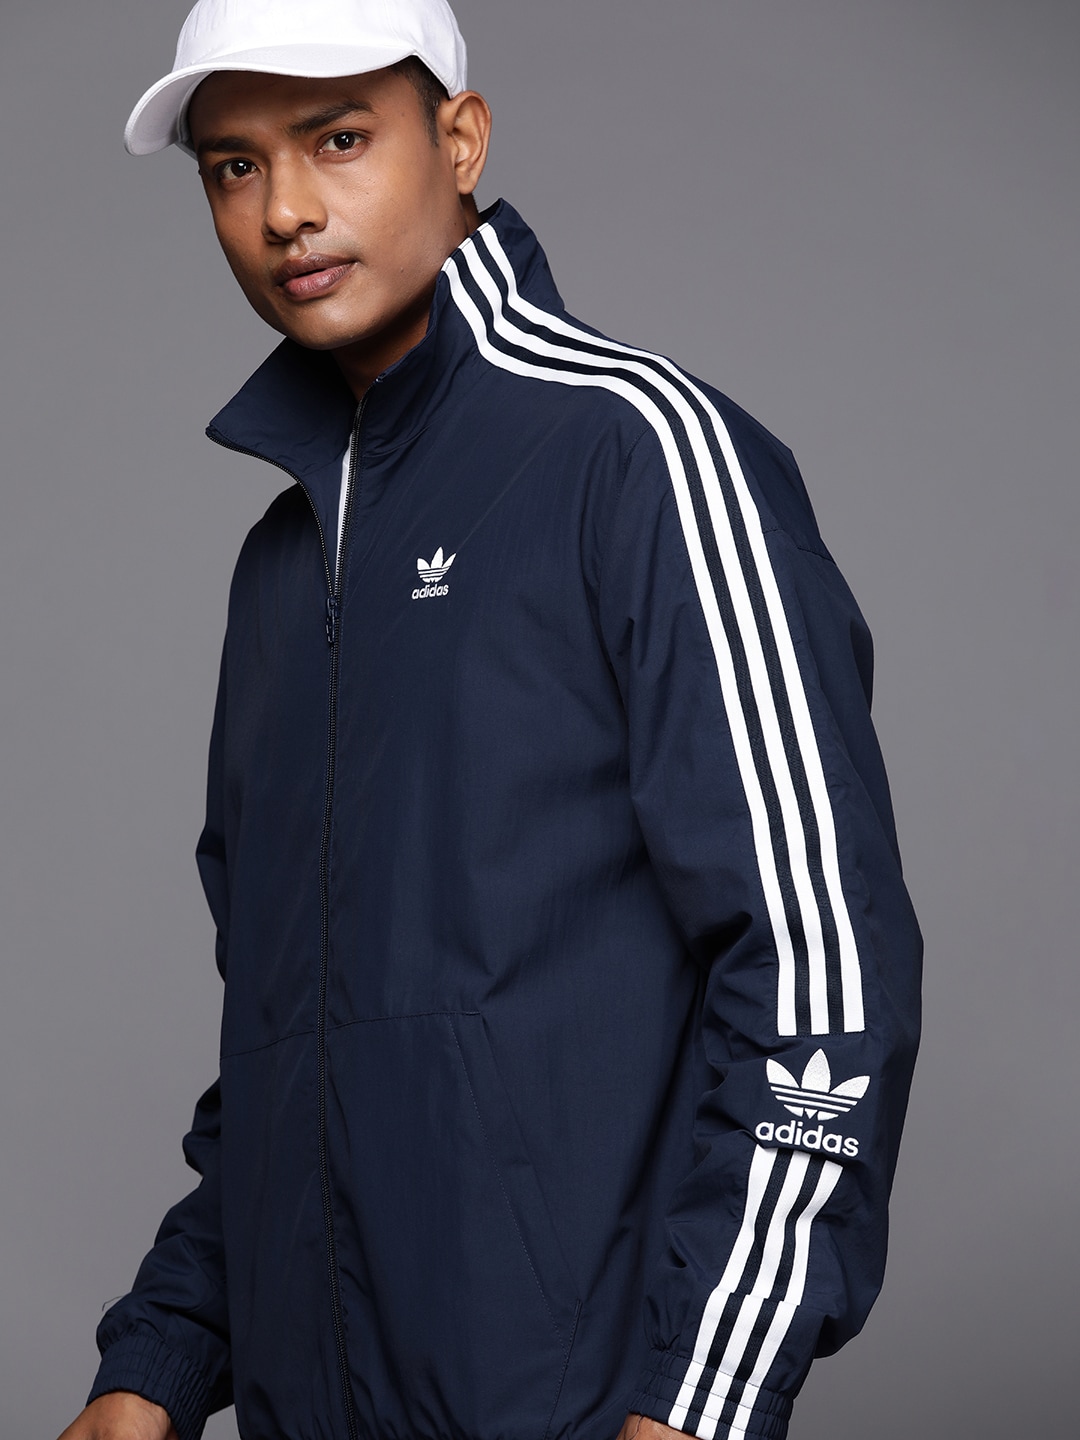 Buy Adidas Originals In India Online Jackets